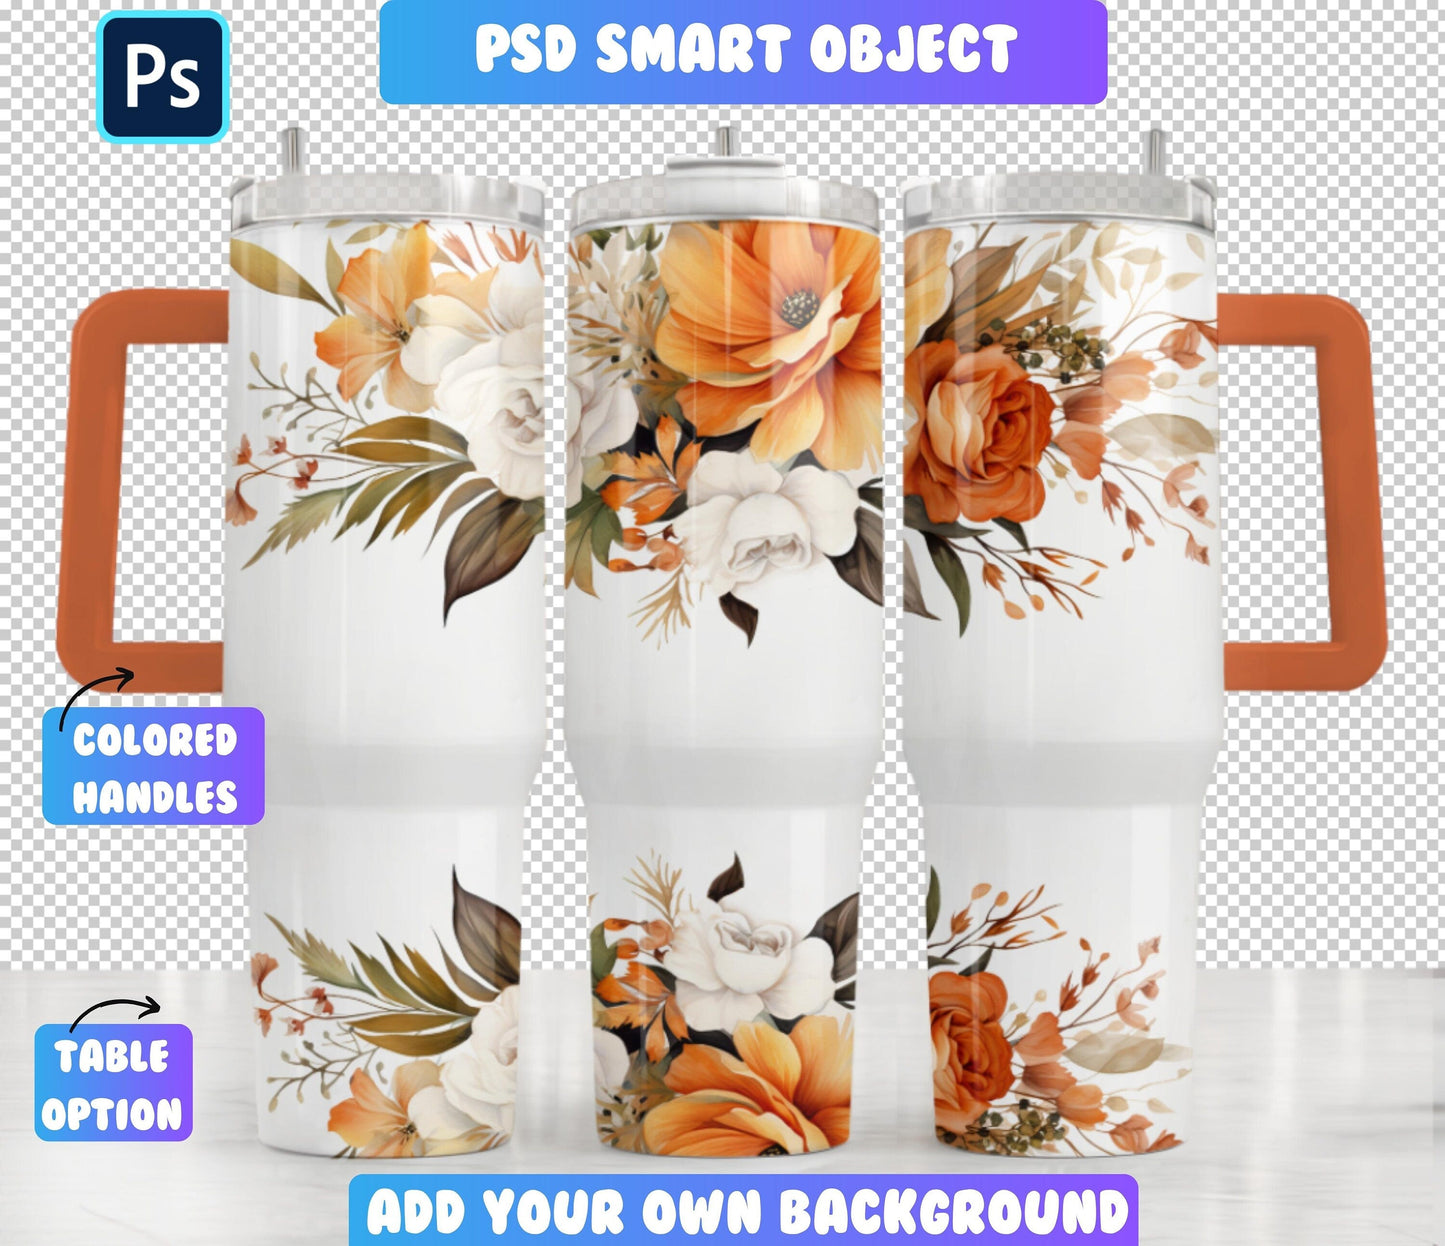 40 oz Tumbler Mockup  Add Your Own Background  40oz Quencher Mockup  PSD Smart Object Mockup  Full Wrap Mockup  4 Backgrounds Included - VartDigitals